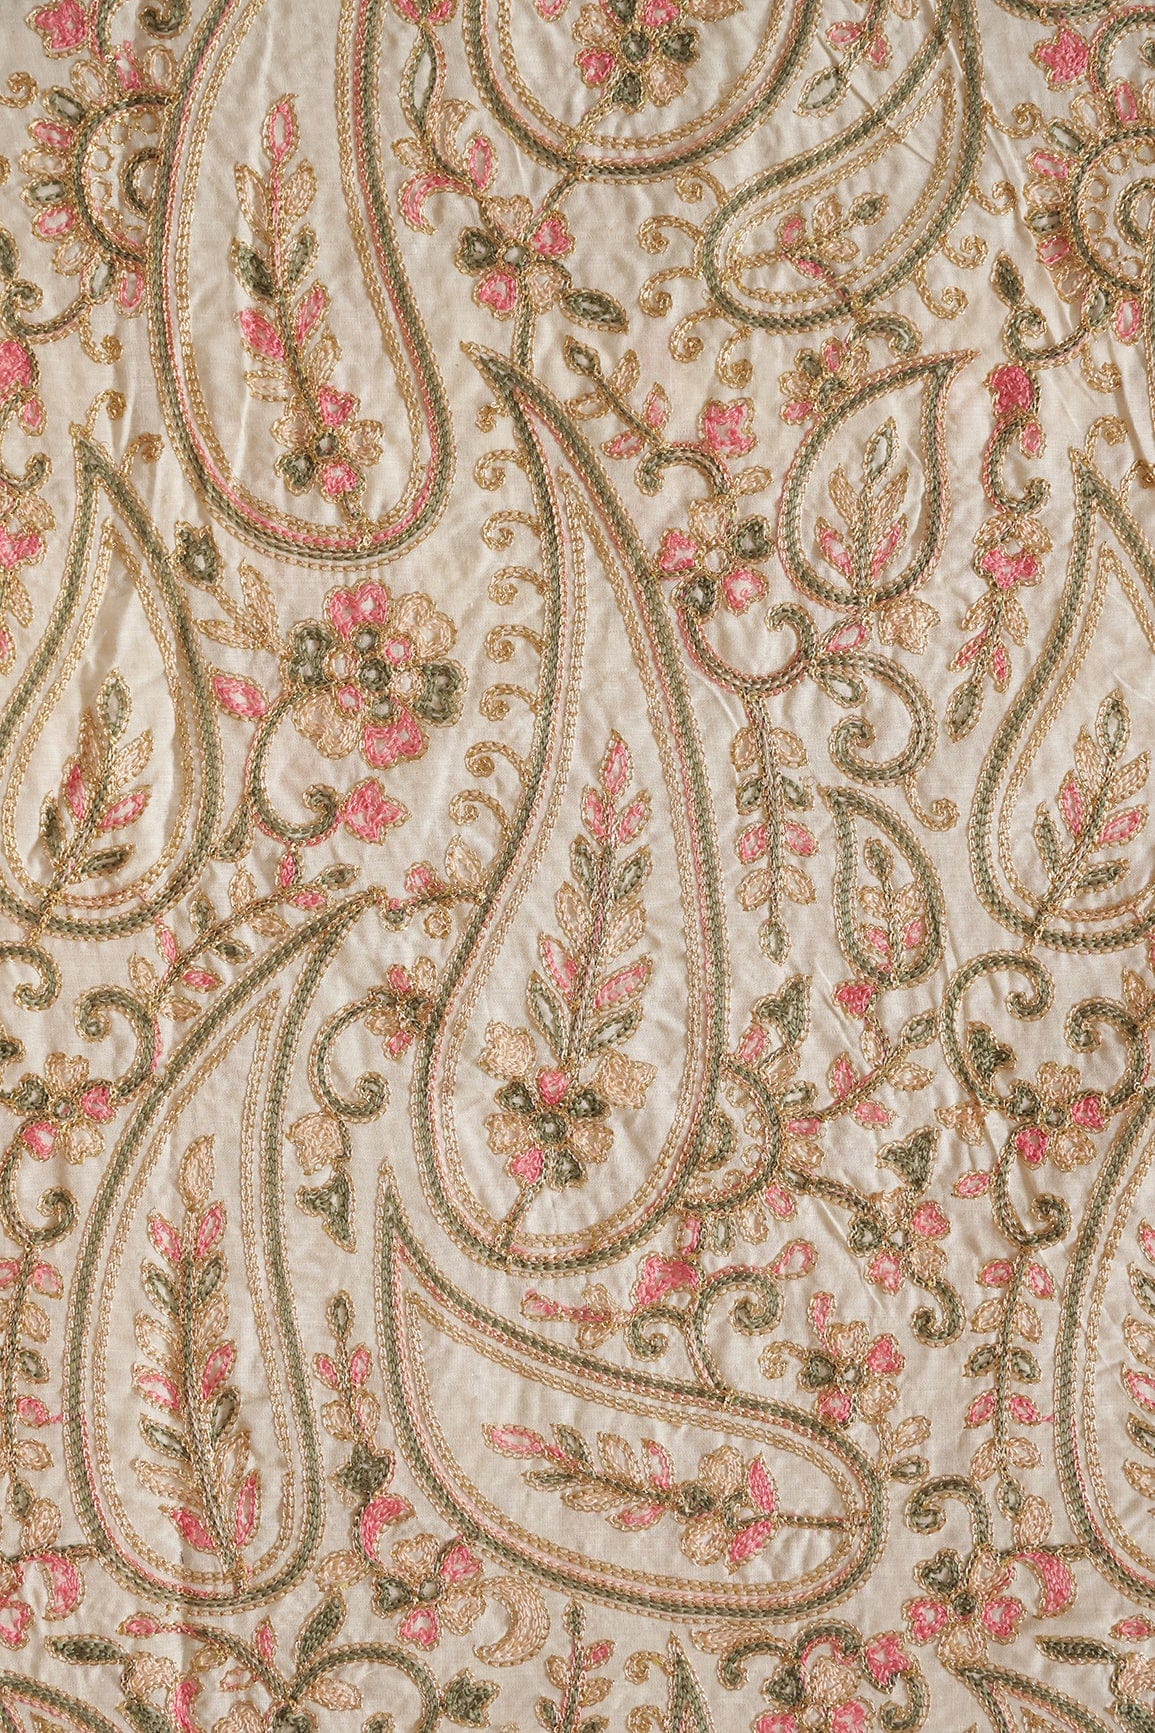 doeraa Embroidery Fabrics 0.80 Meter Cut Piece Of Multi Thread Beautiful Heavy Paisley Kashmiri Embroidery Work On Off White Cotton Fabric